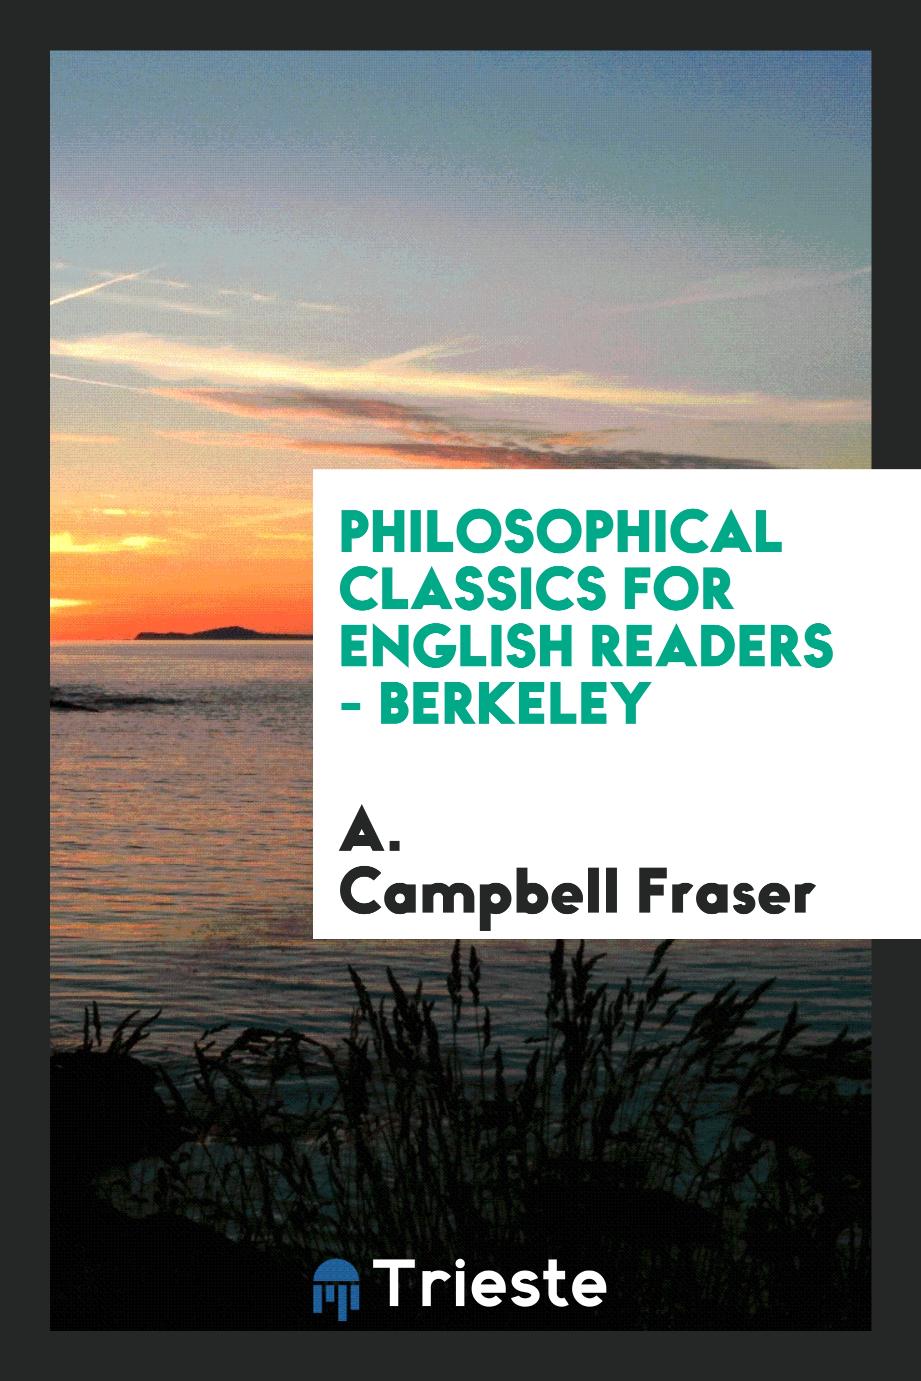 Philosophical classics for English readers - Berkeley